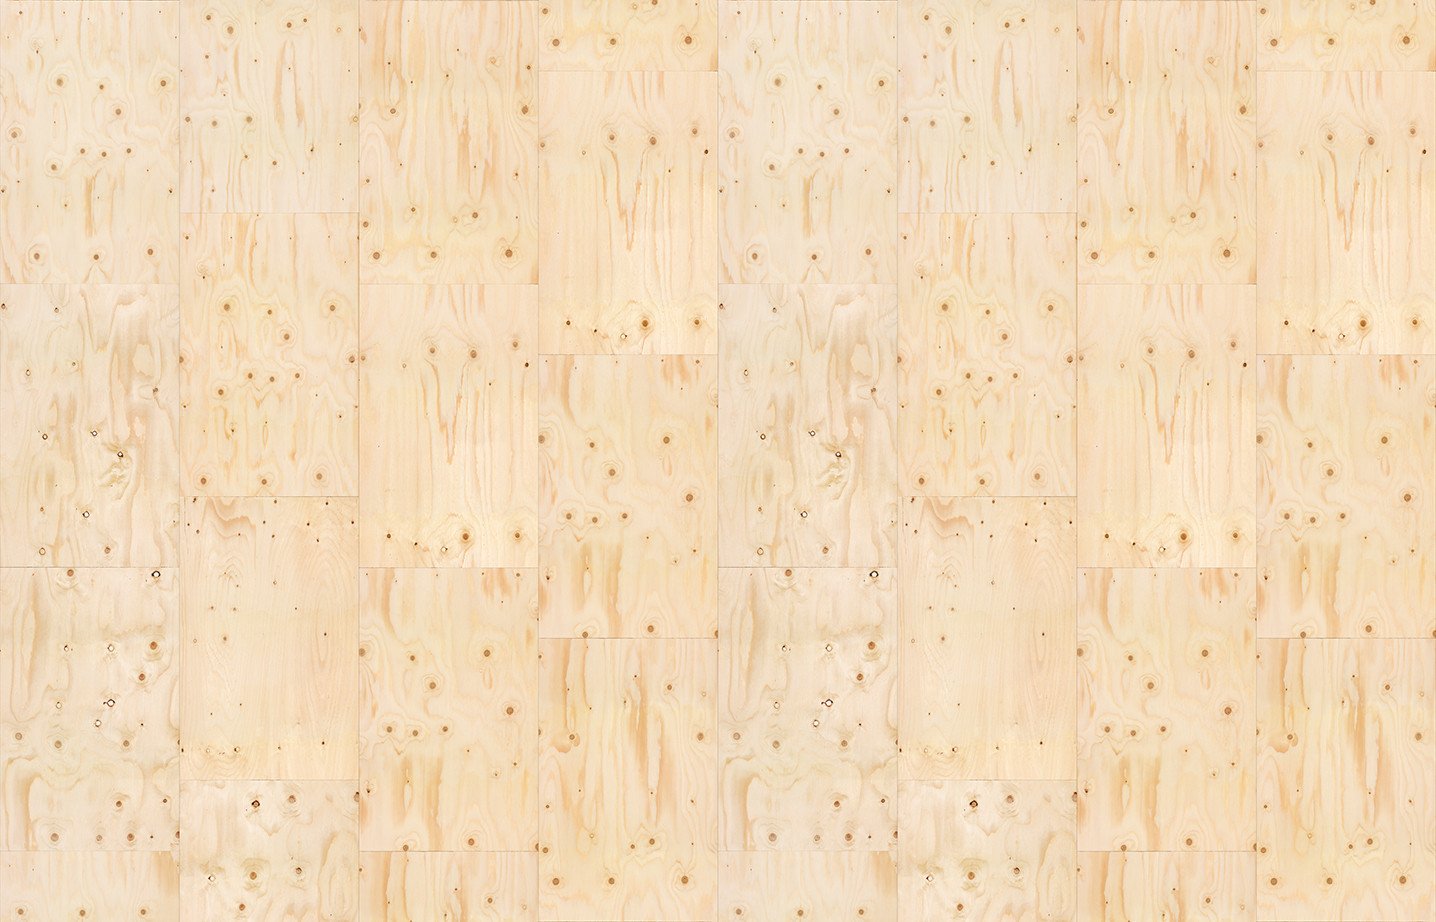 Sample Plywood Wallpaper design by Piet Hein Eek for NLXL Wallpaper